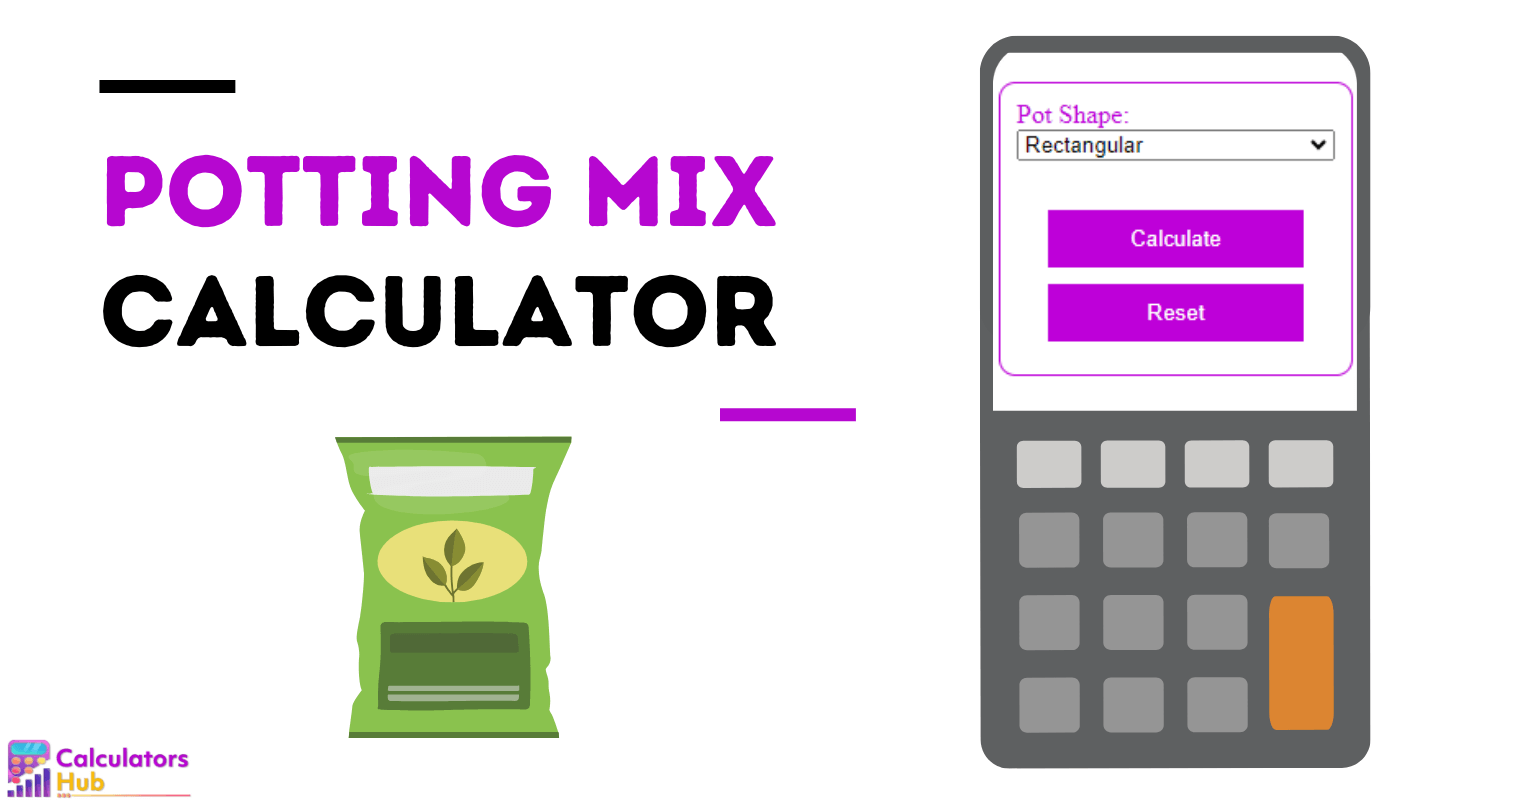 Potting Mix Calculator